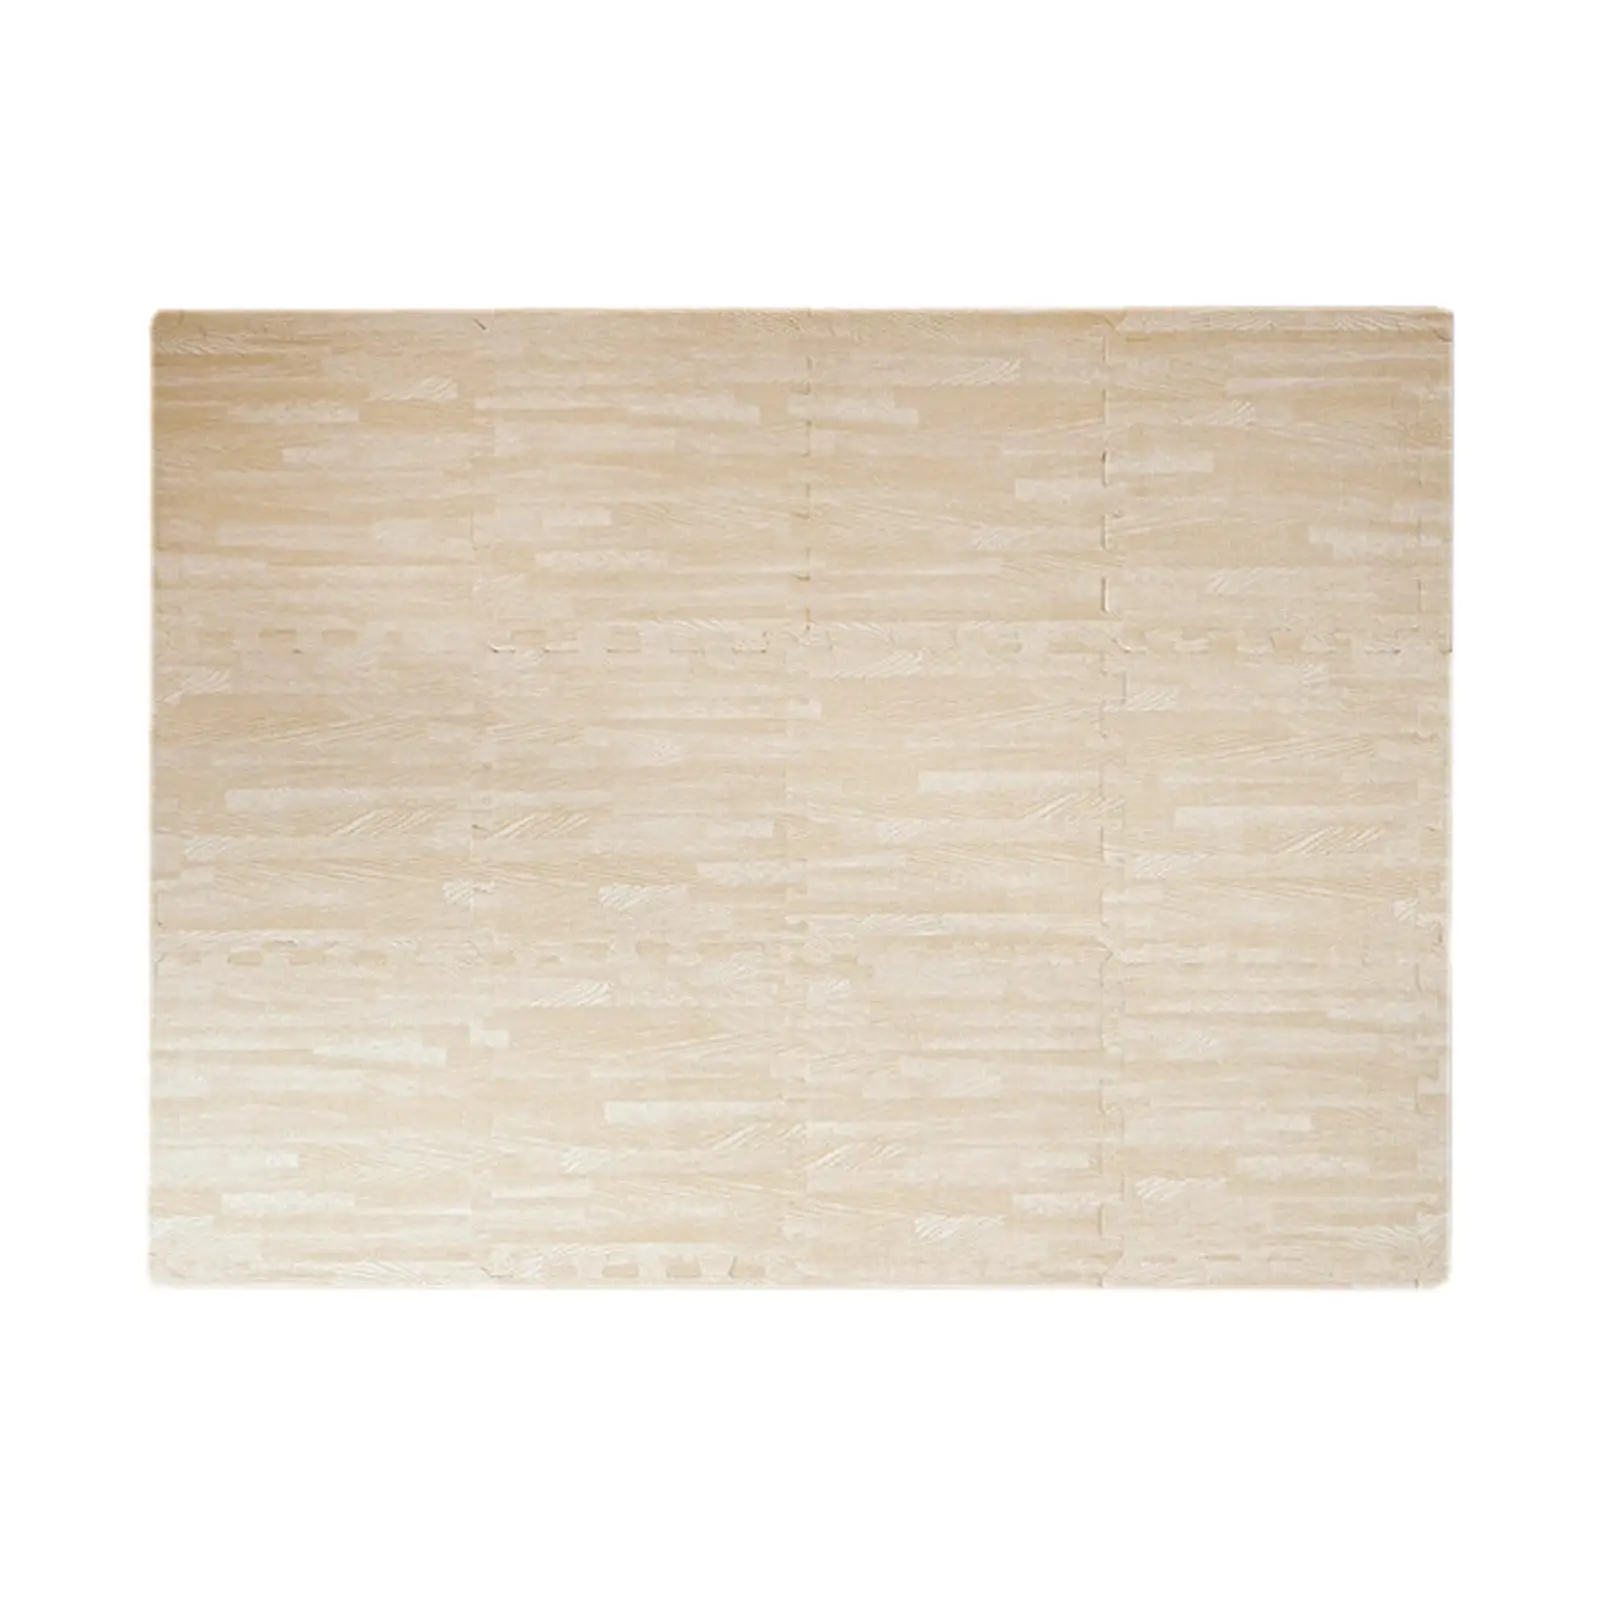 12 Pcs Interlocking Puzzle Mat Waterproof Flooring Padding Tiles Play Mat Baby Crawling Pad 12x12inch, Wood Grain